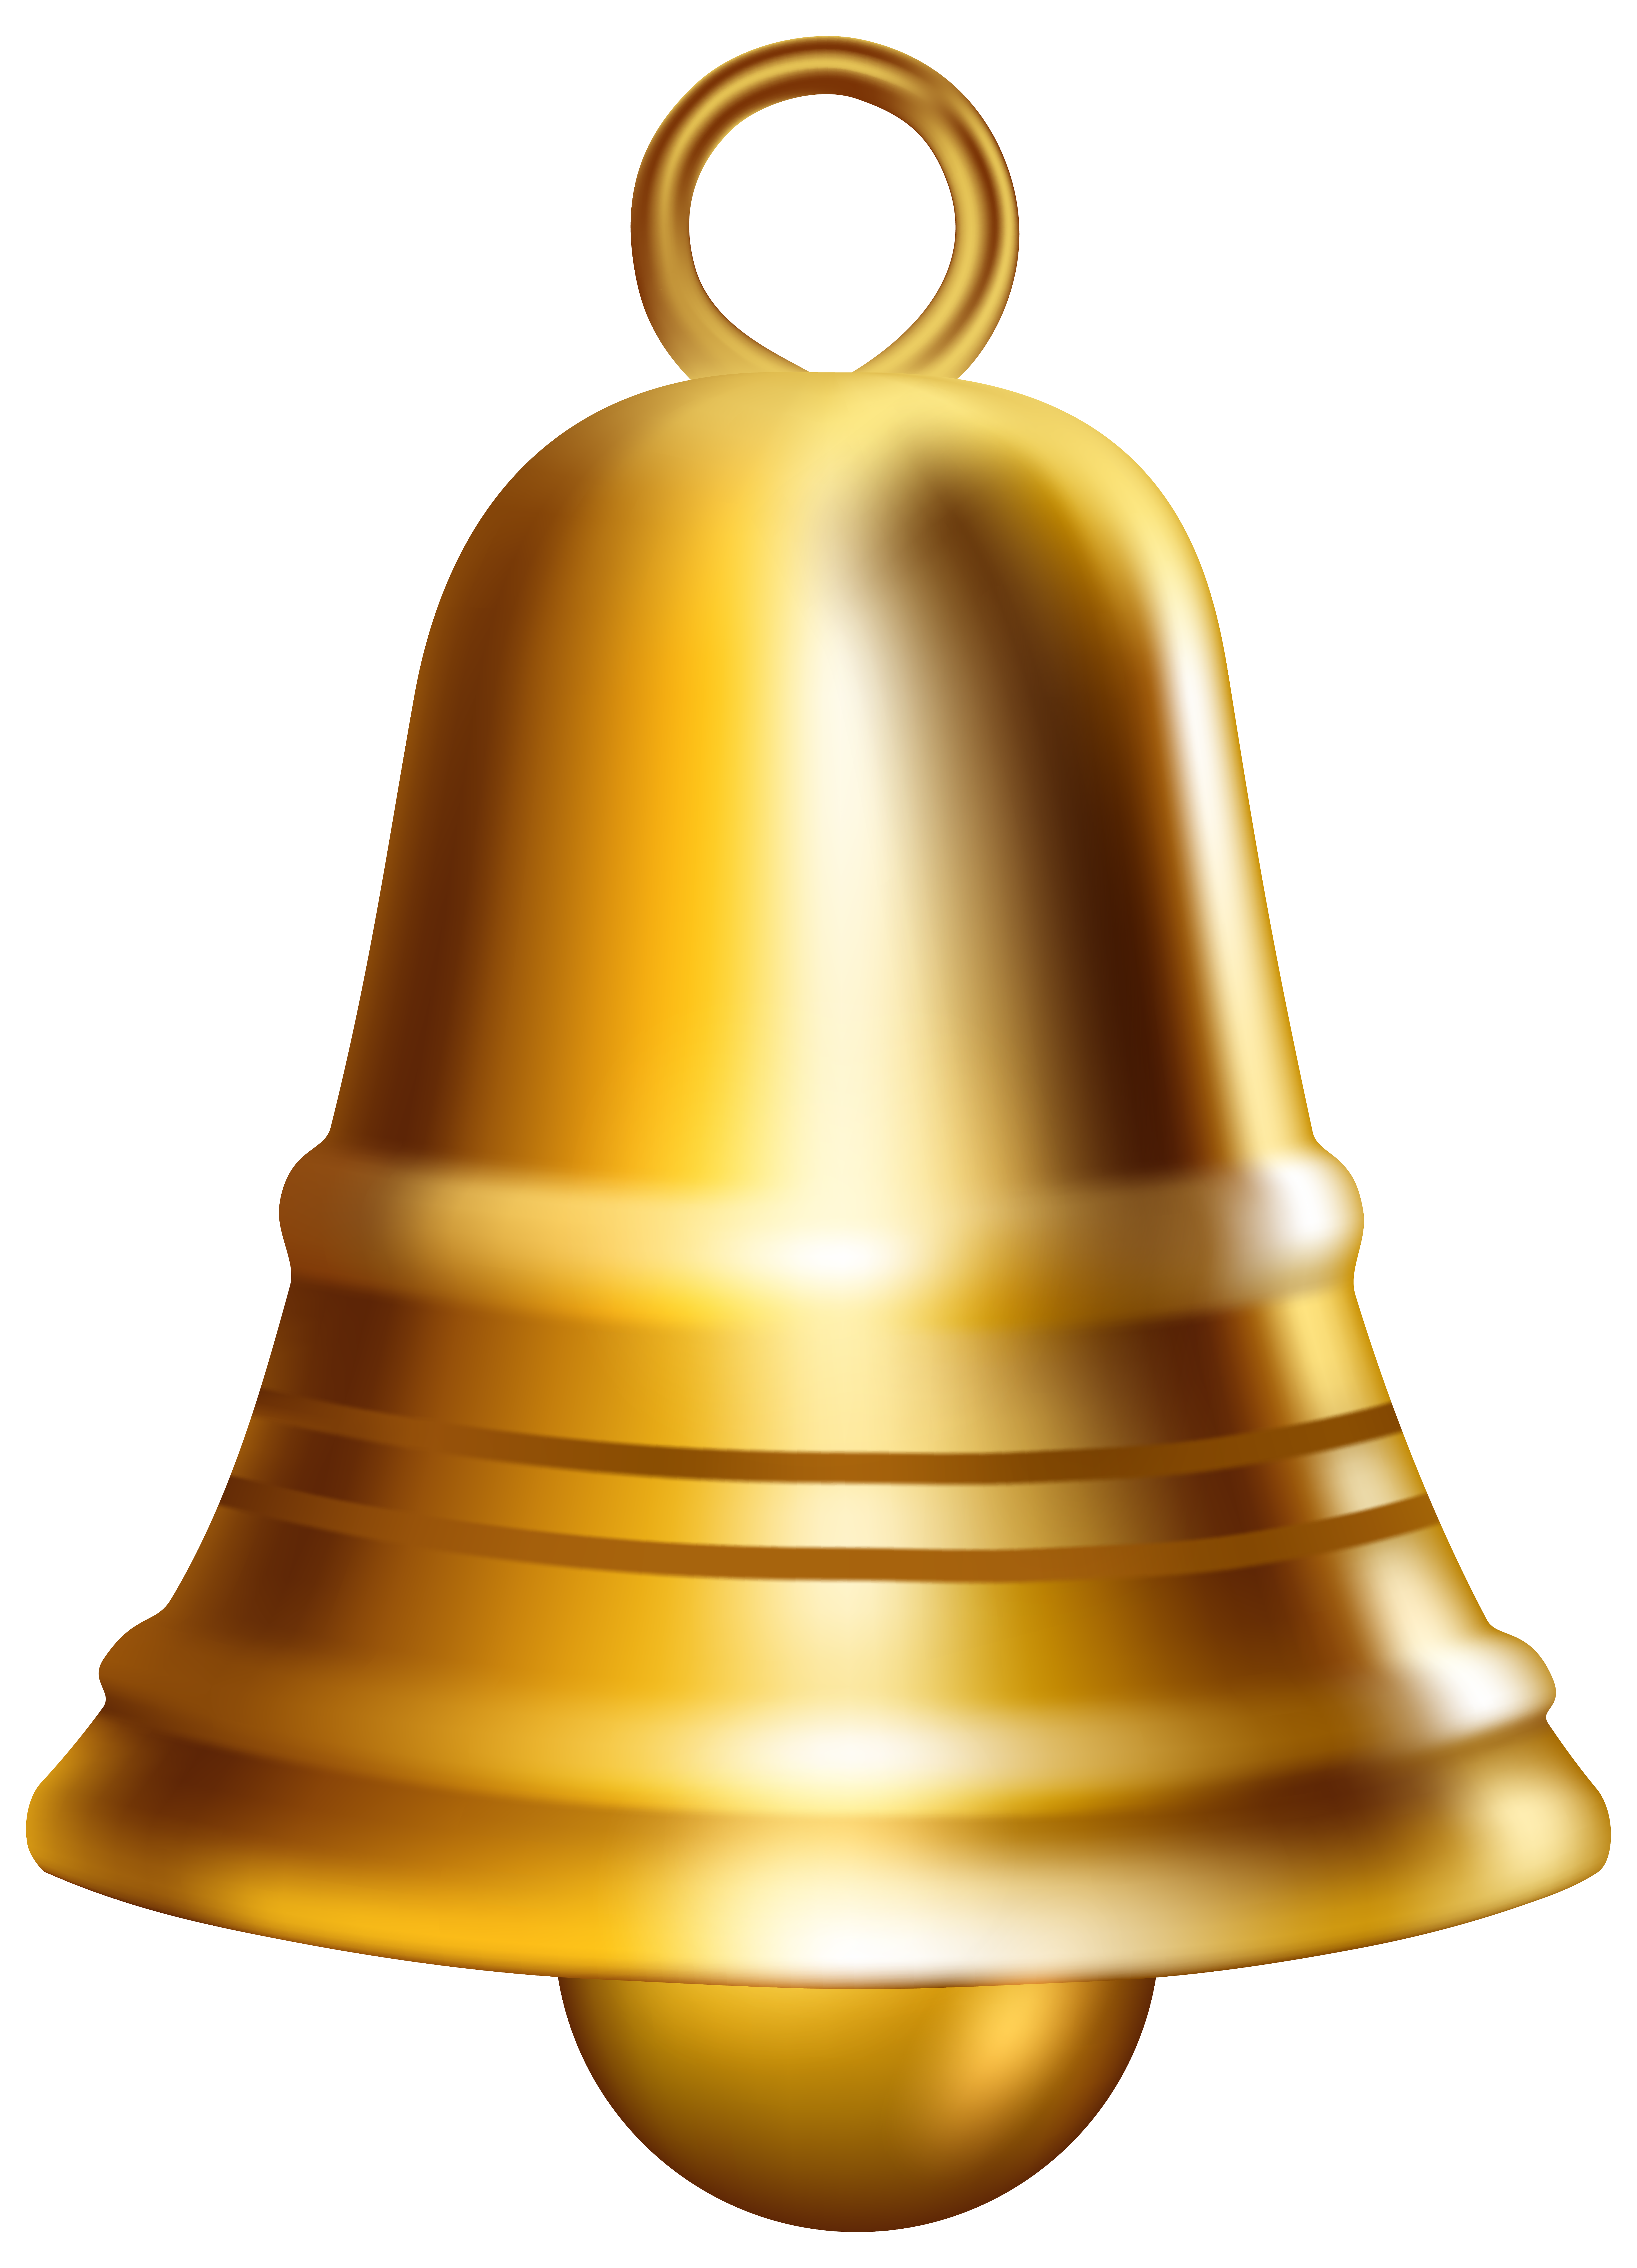 bell clipart gold